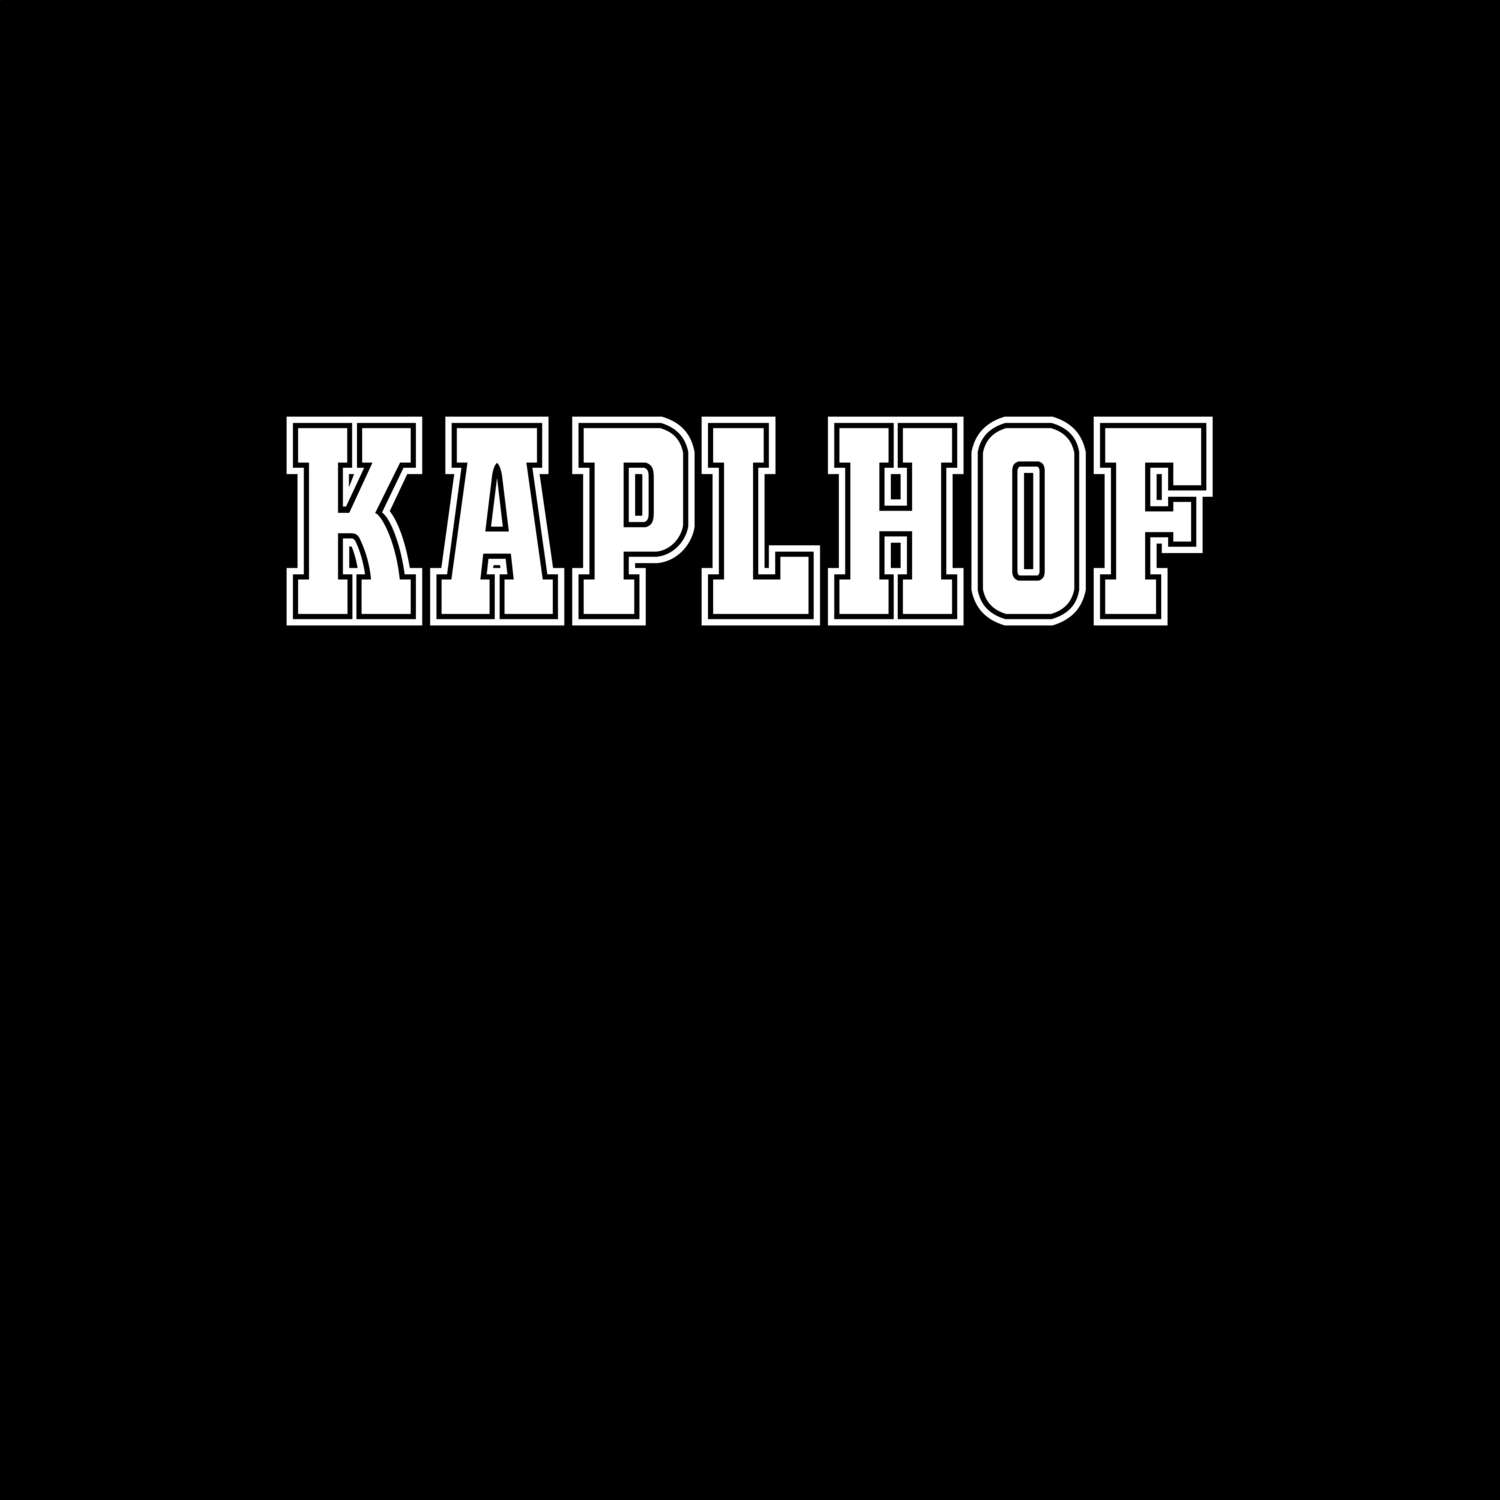 Kaplhof T-Shirt »Classic«